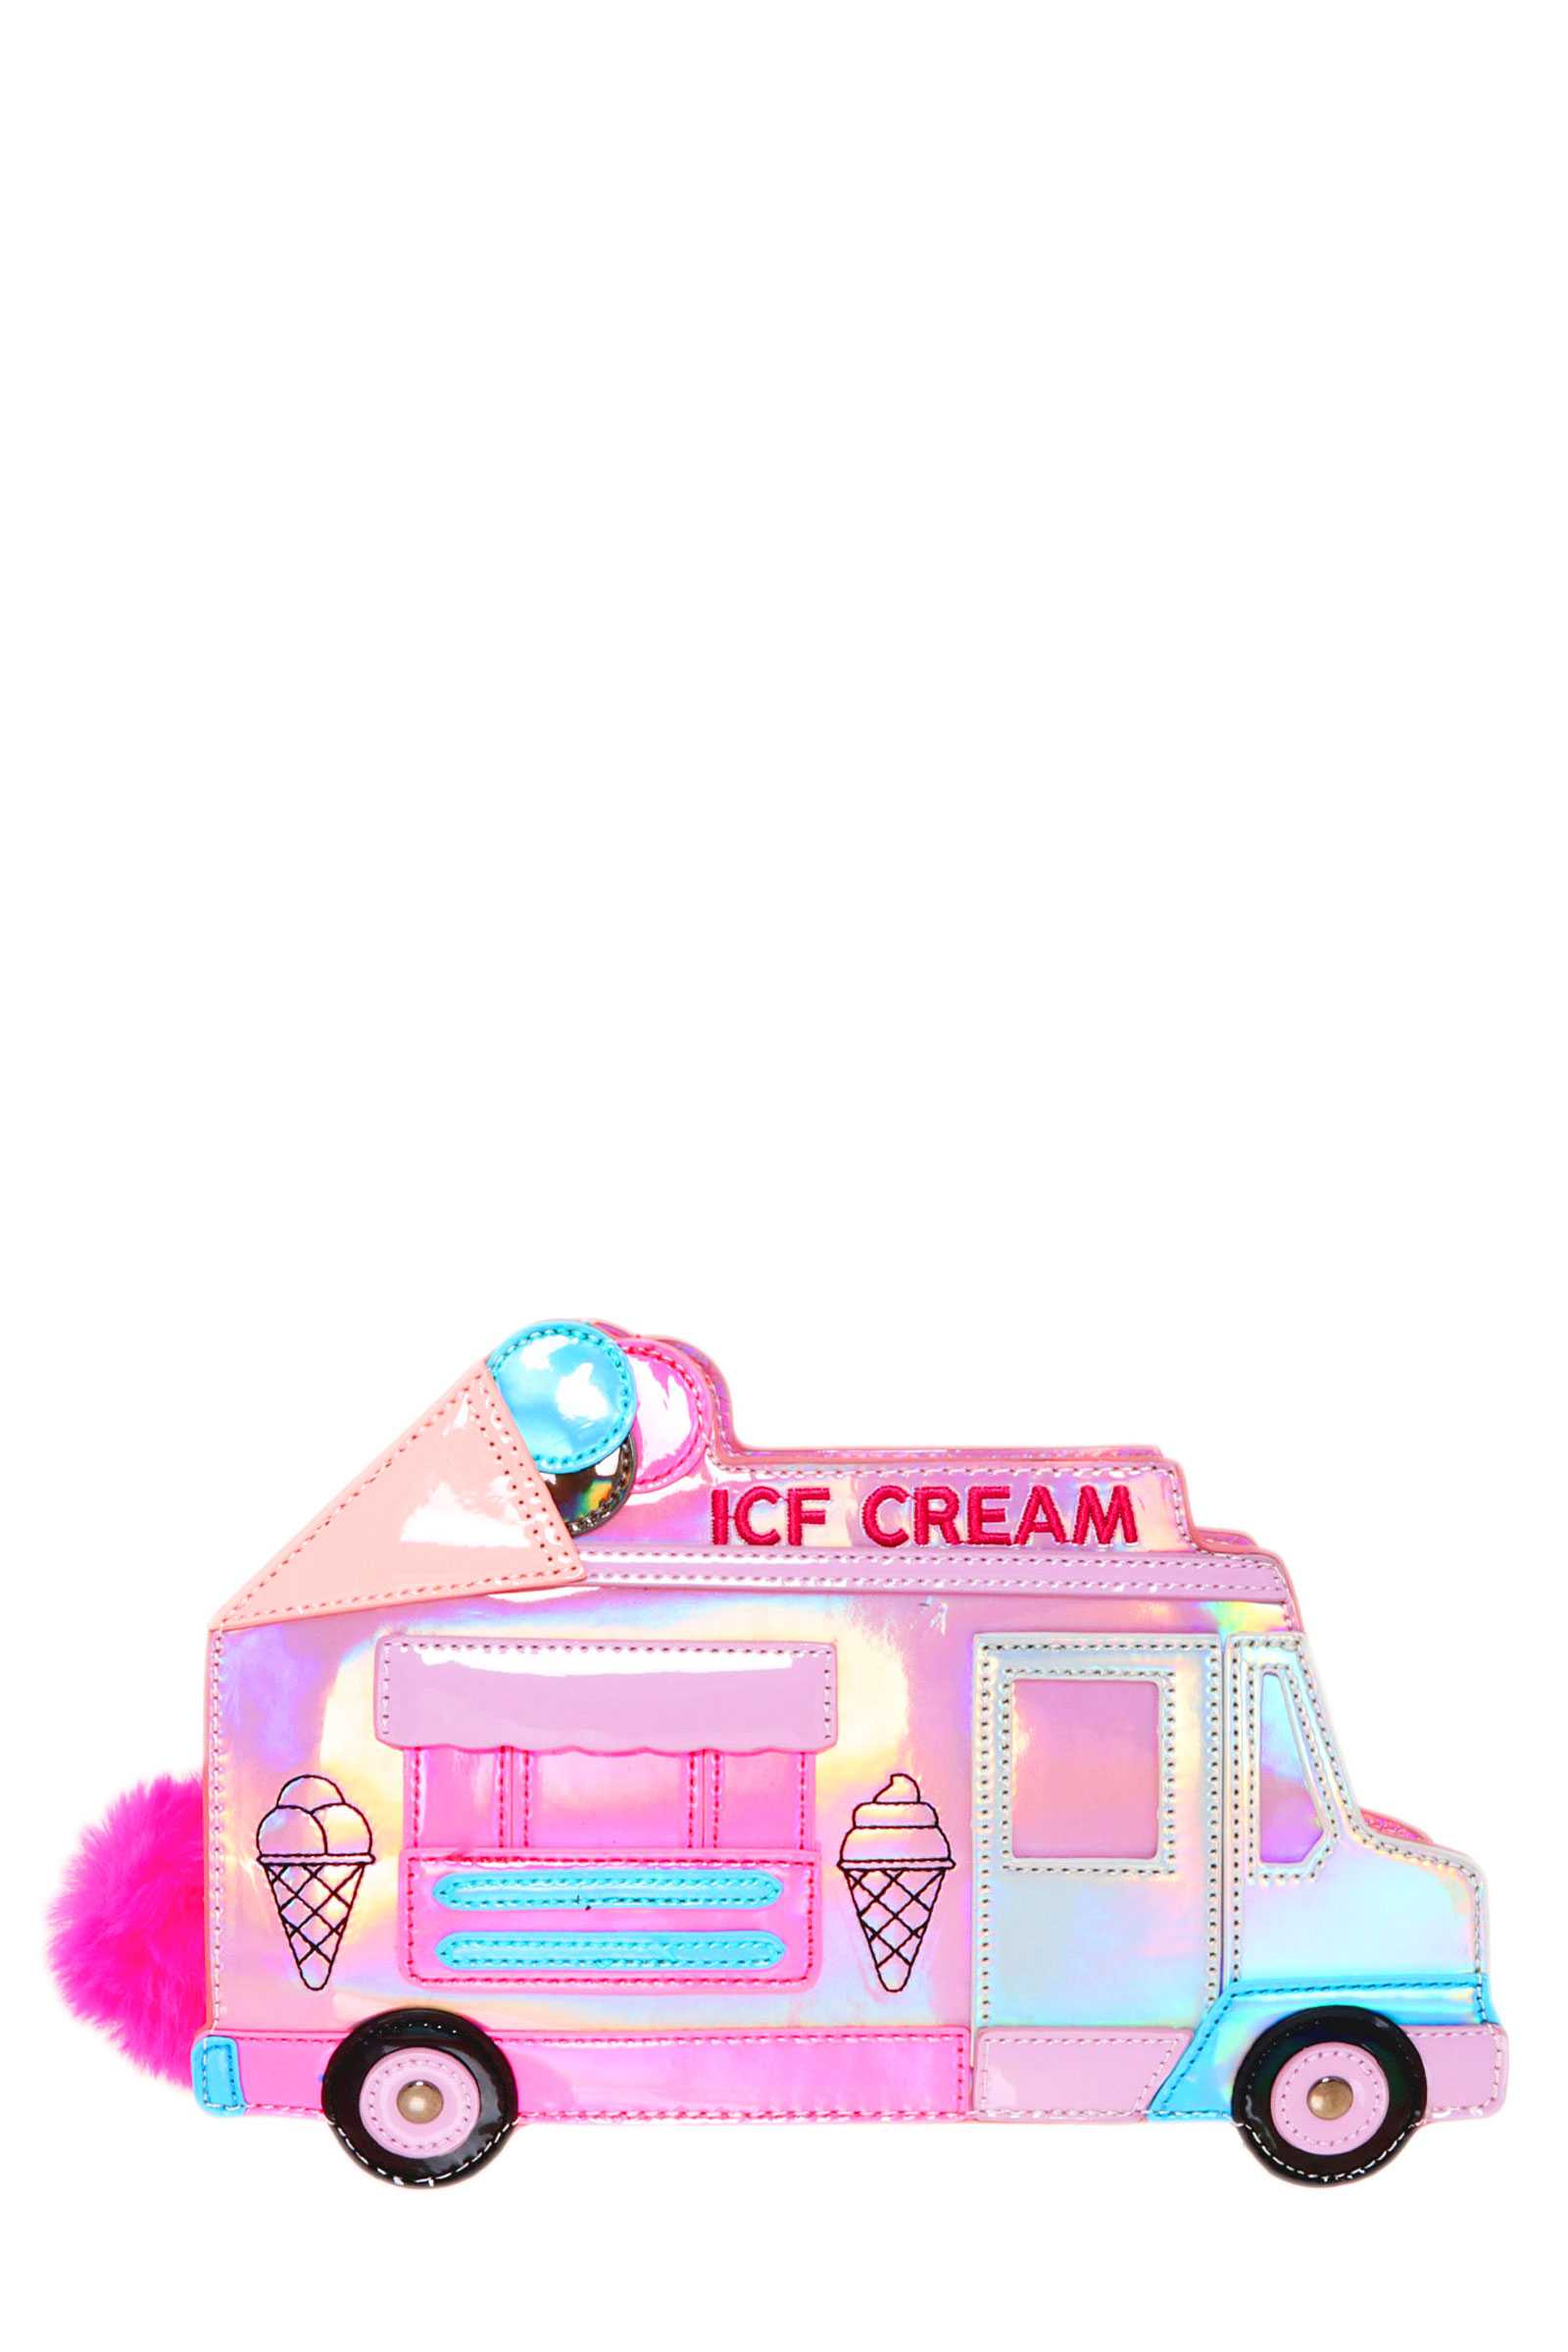 Holographic Ice Cream Truck Novelty Bag.jpg